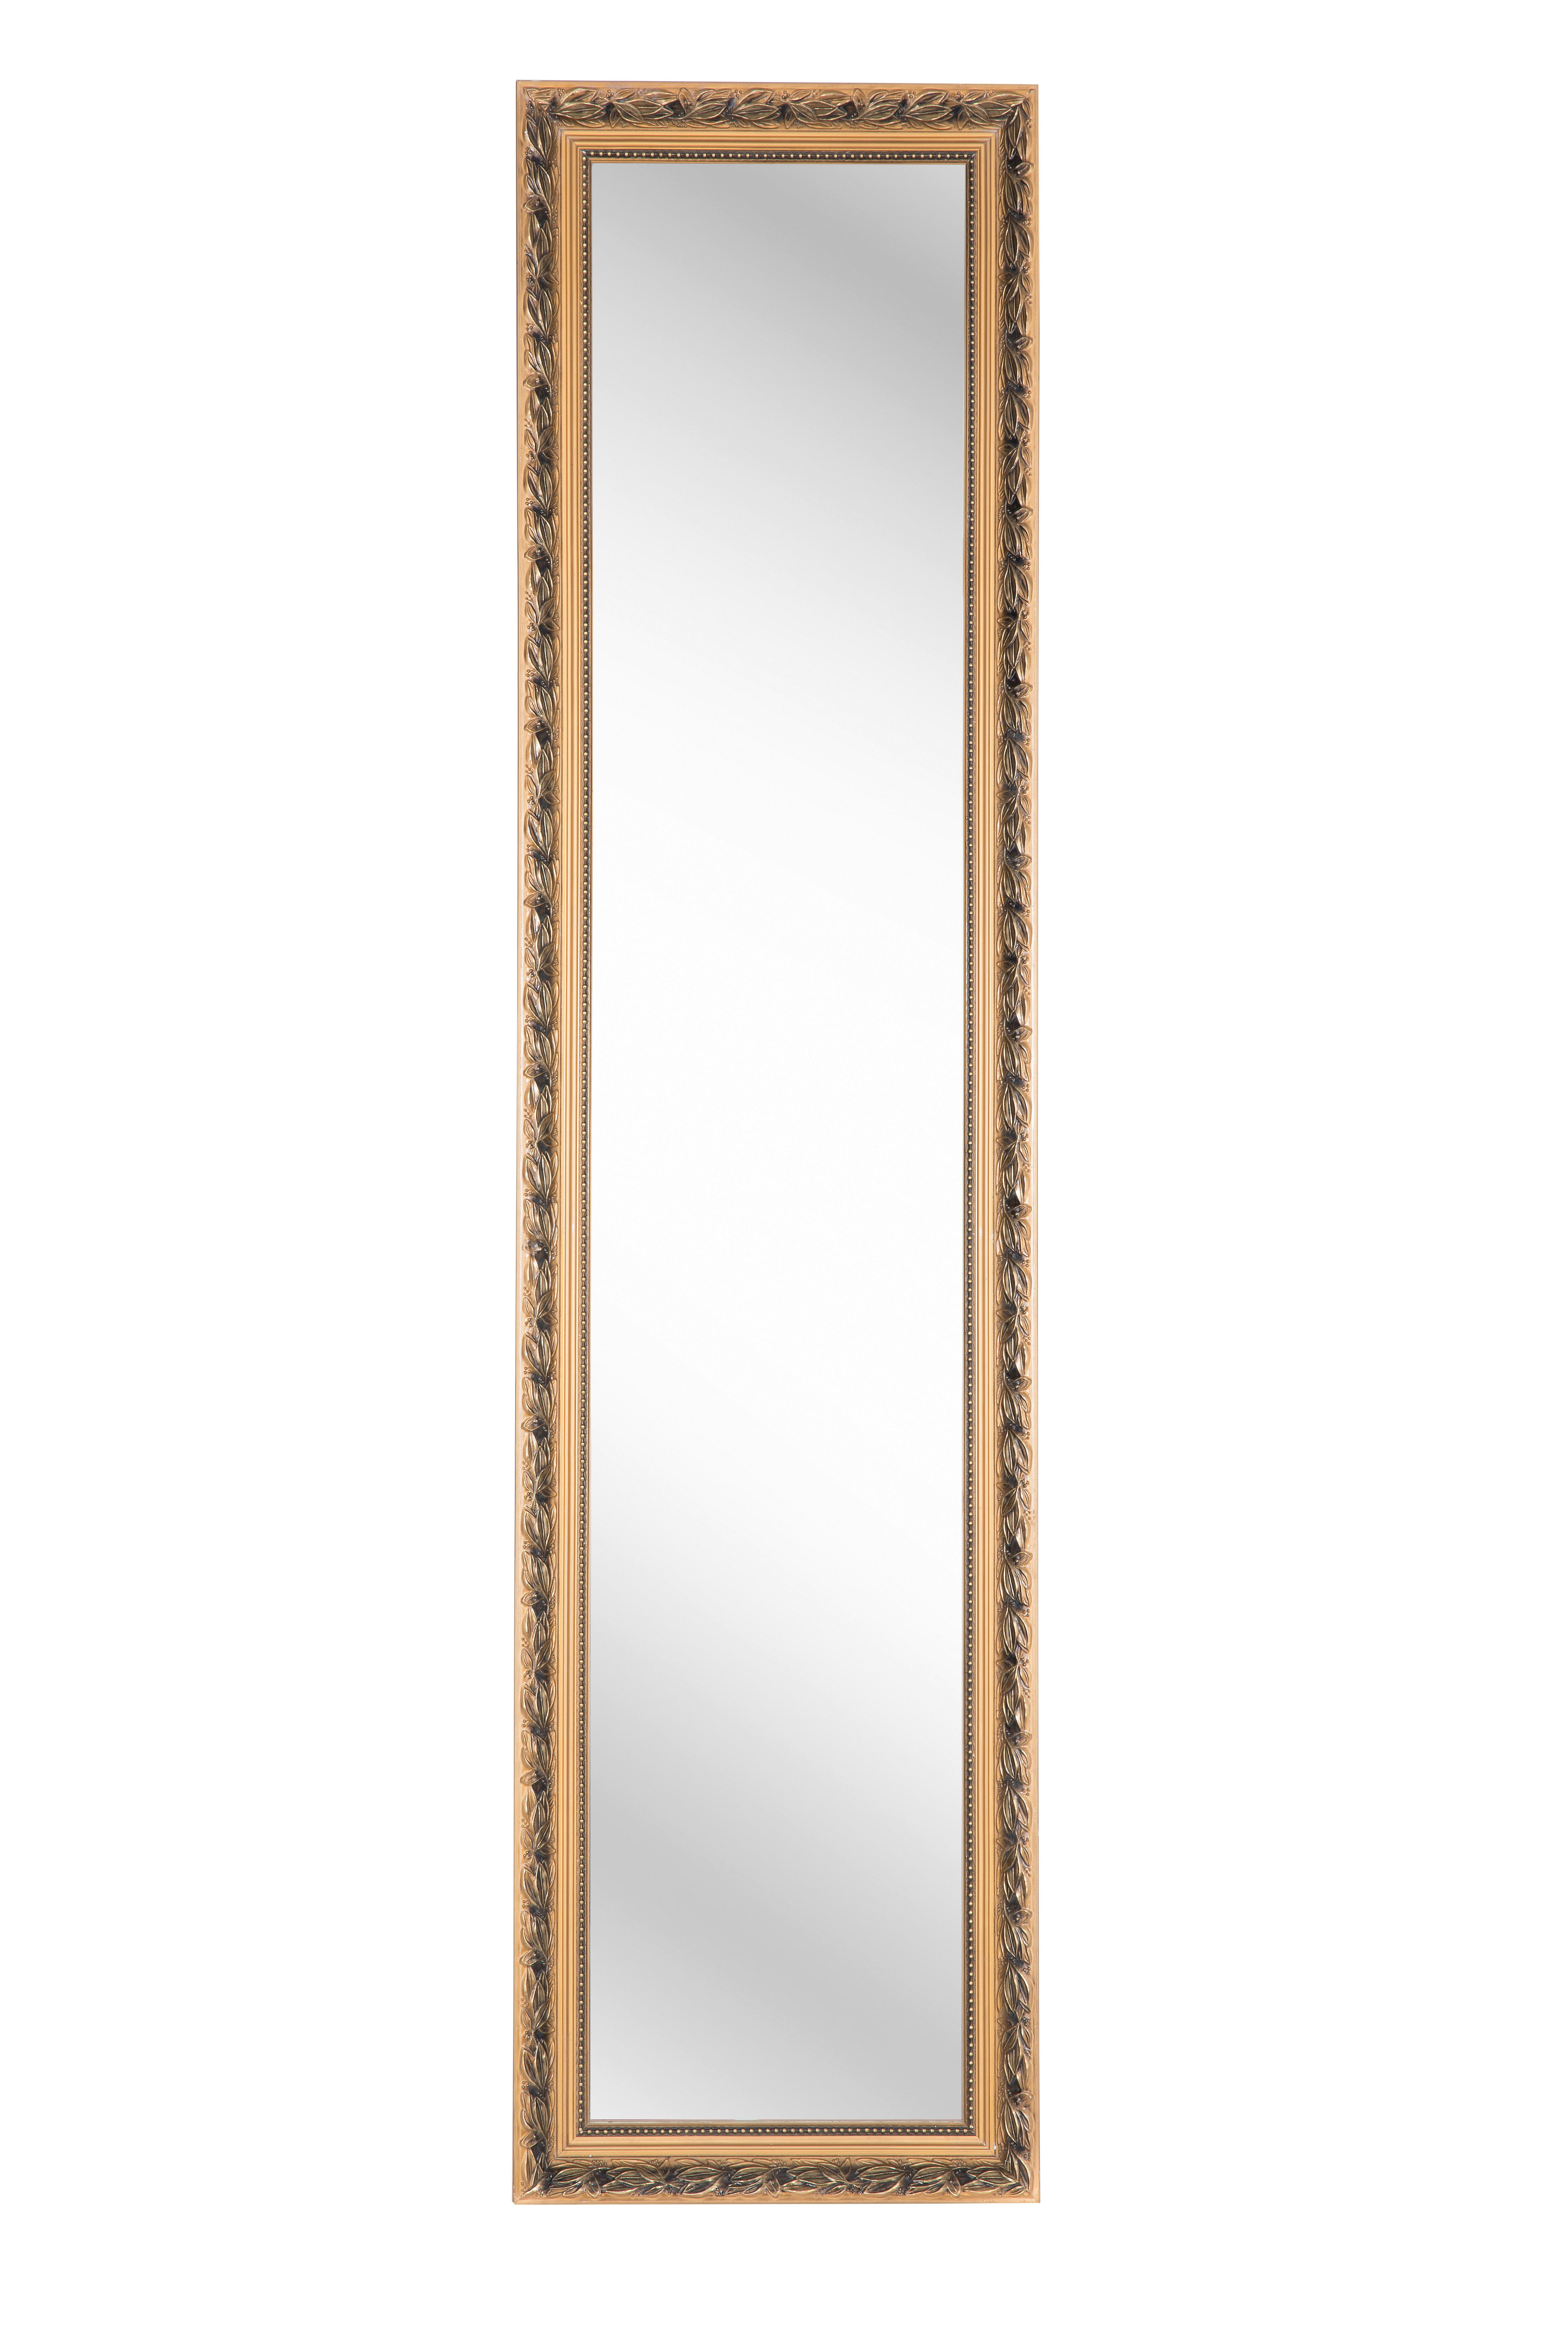 STANDSPIEGEL 40/160/5 cm  - Goldfarben, LIFESTYLE, Glas/Holz (40/160/5cm) - Carryhome